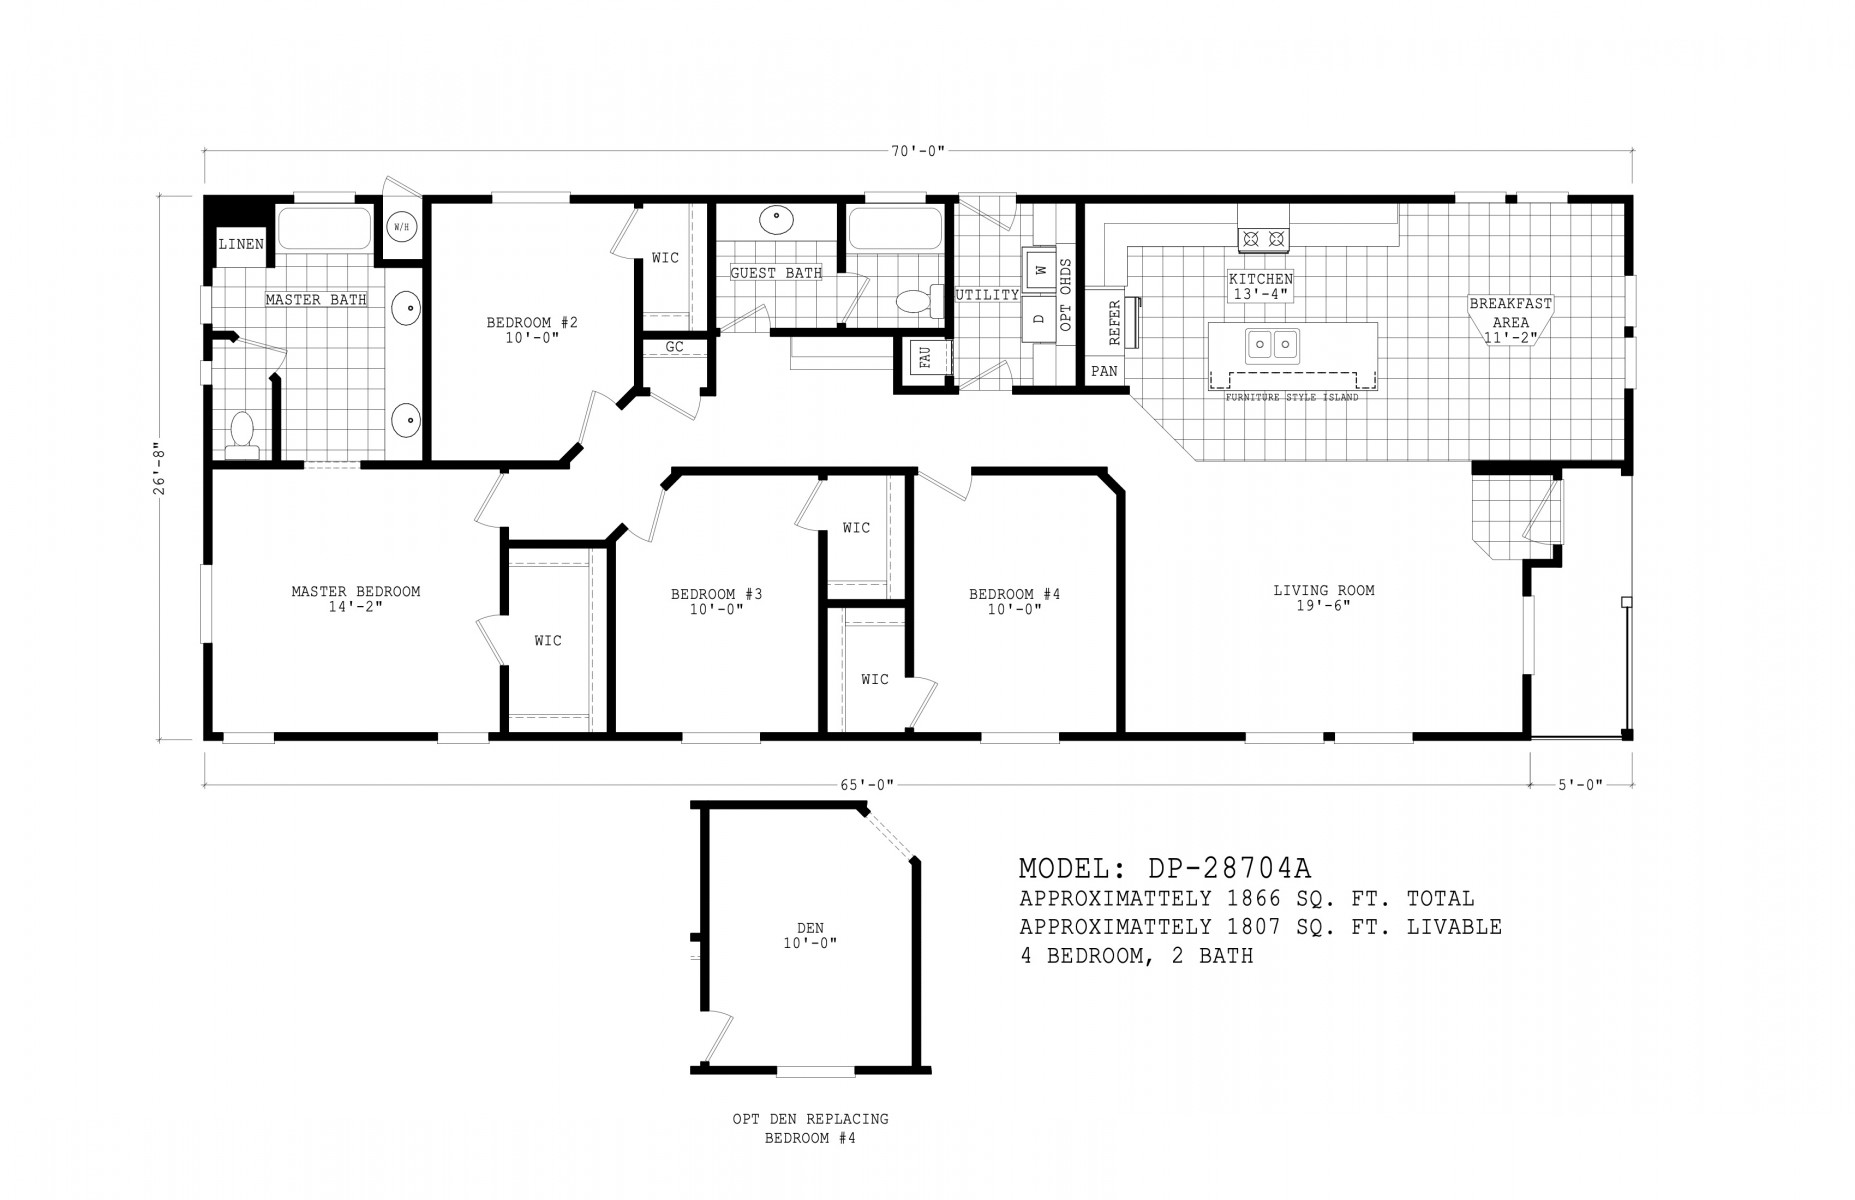 Homes Direct Modular Homes - Model DP28704A - Floorplan